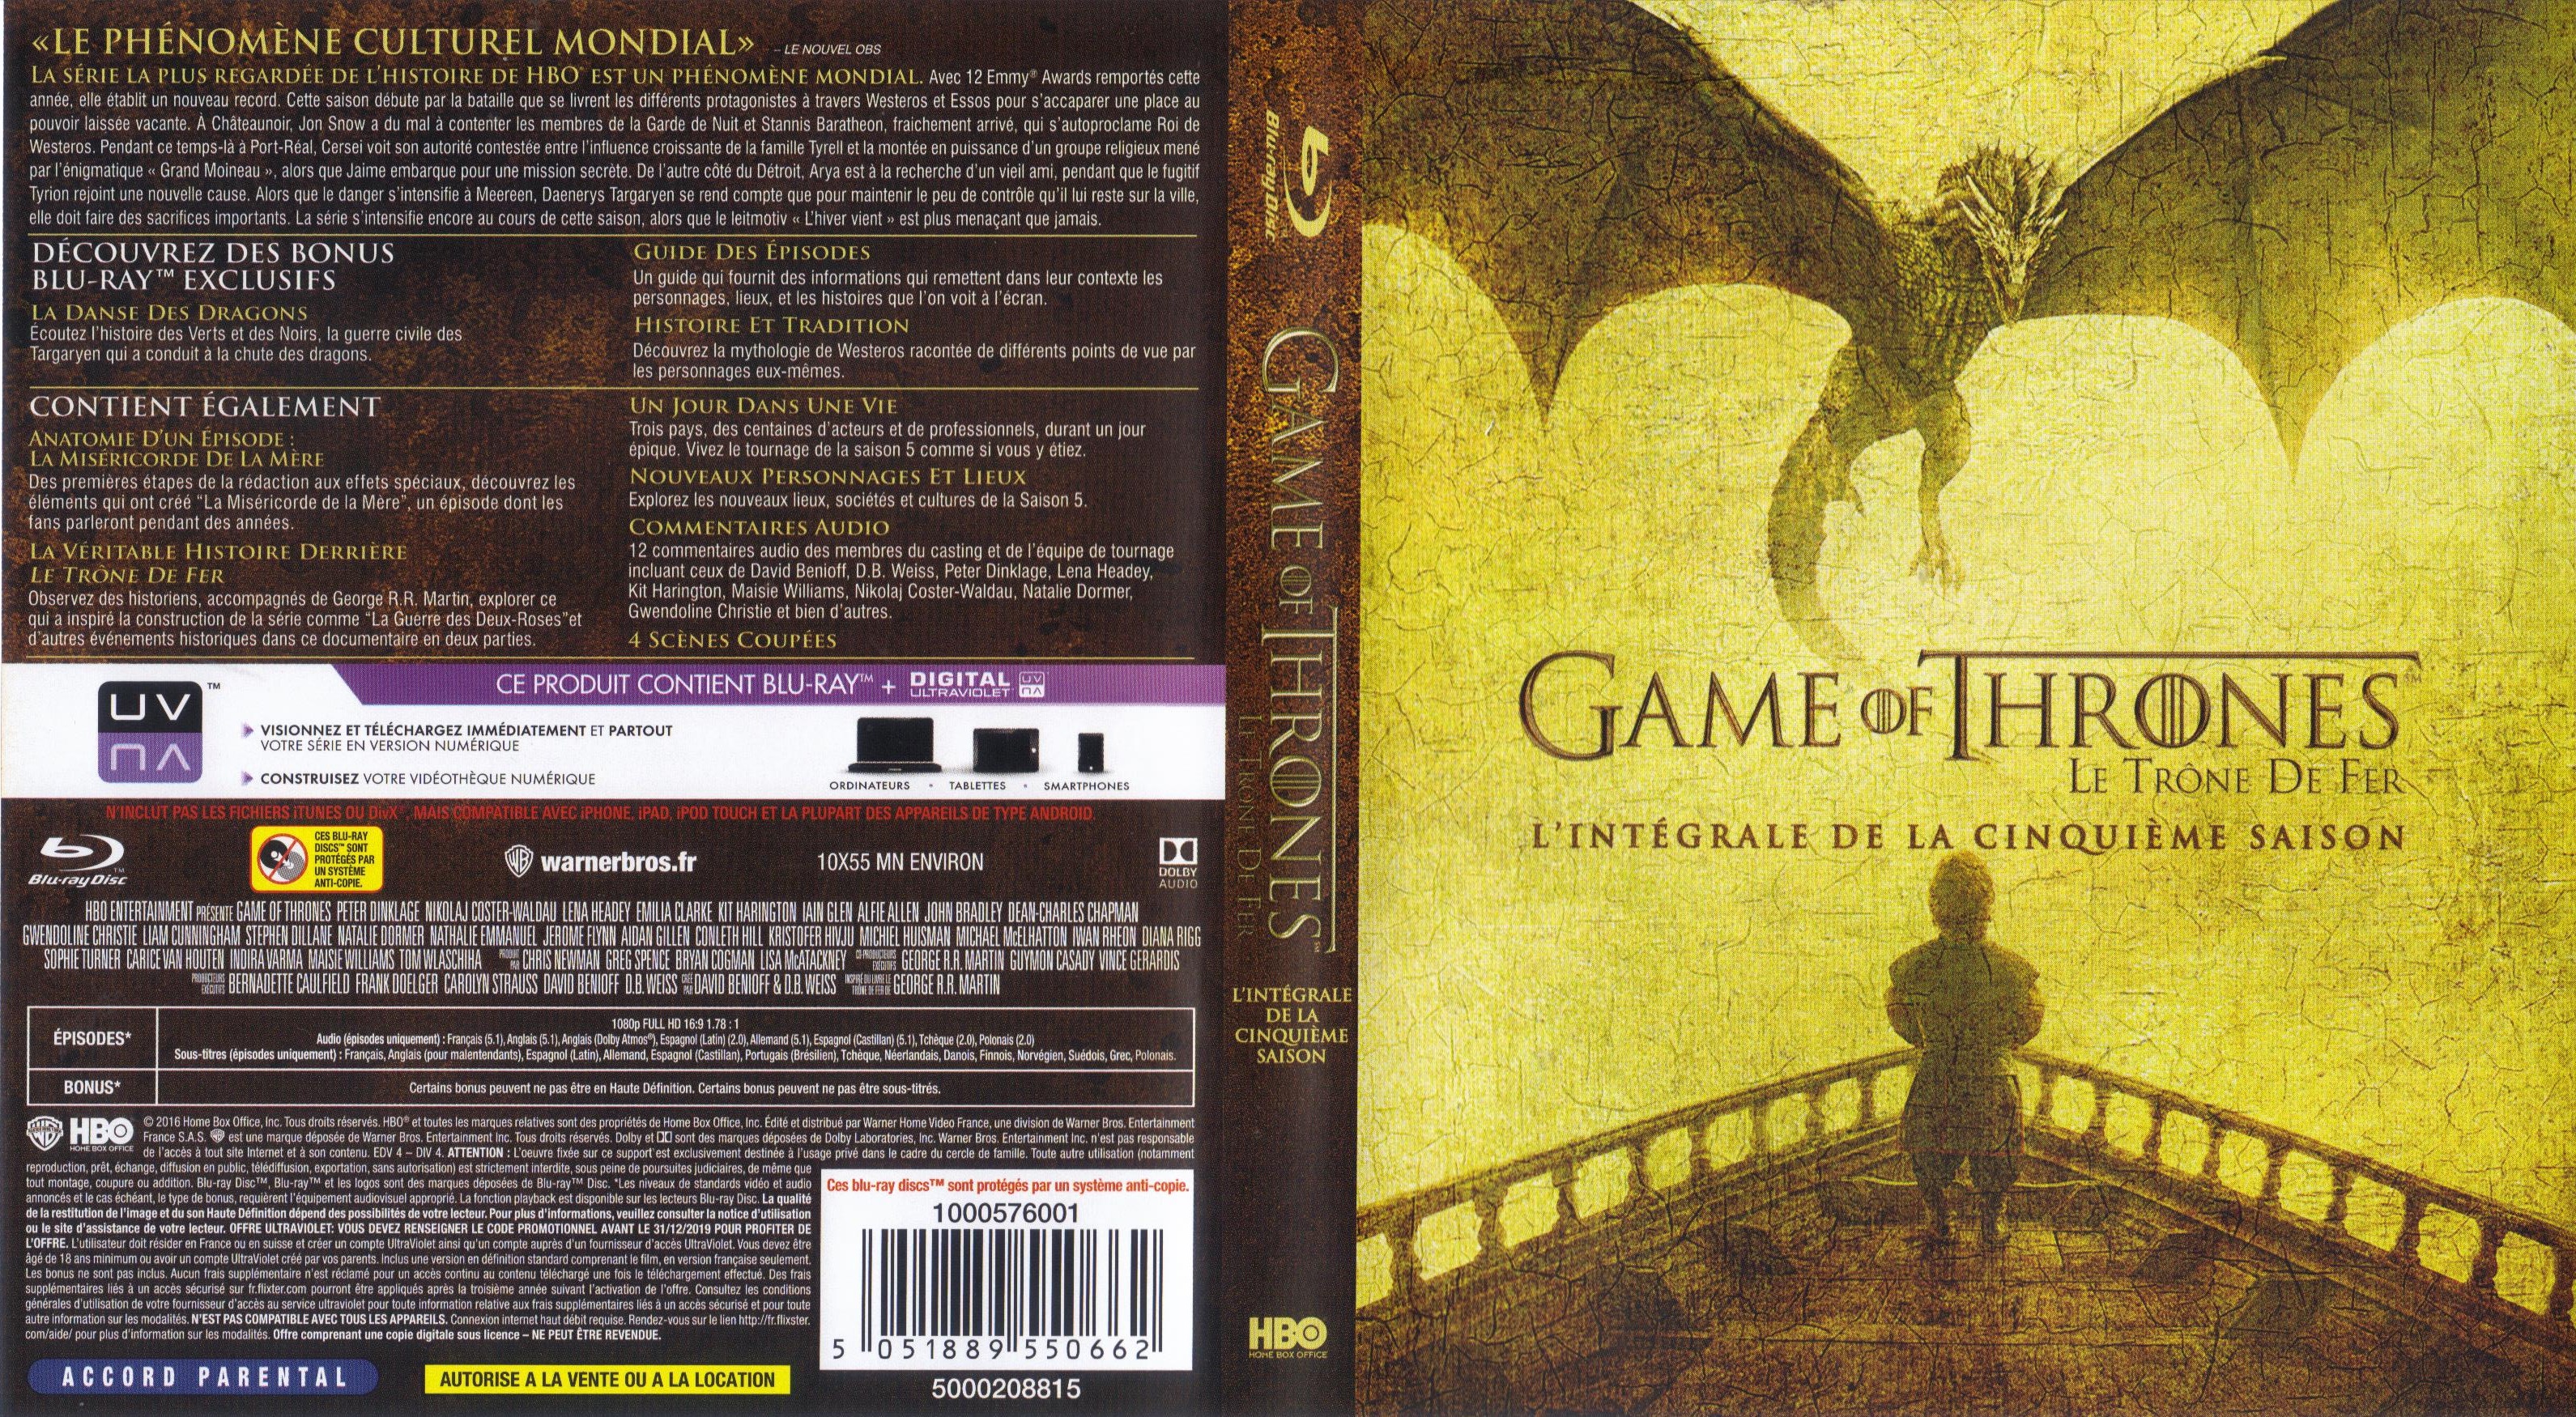 Jaquette DVD Game of thrones (le trone de fer) Saison 5 (BLU-RAY)